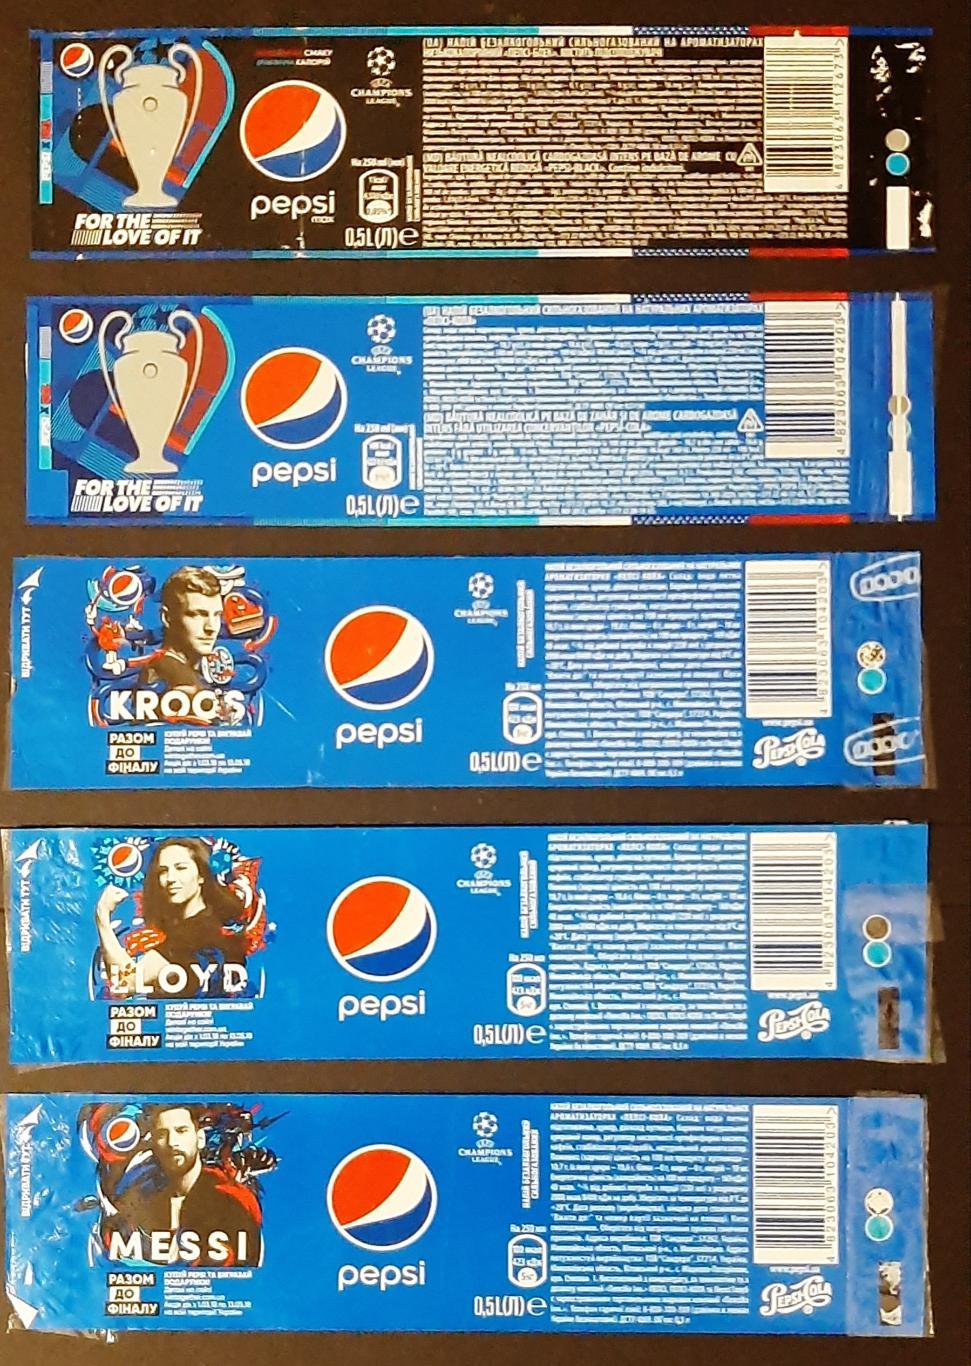 Етикетки Pepsi Футбол 5 шт. 0,5л.